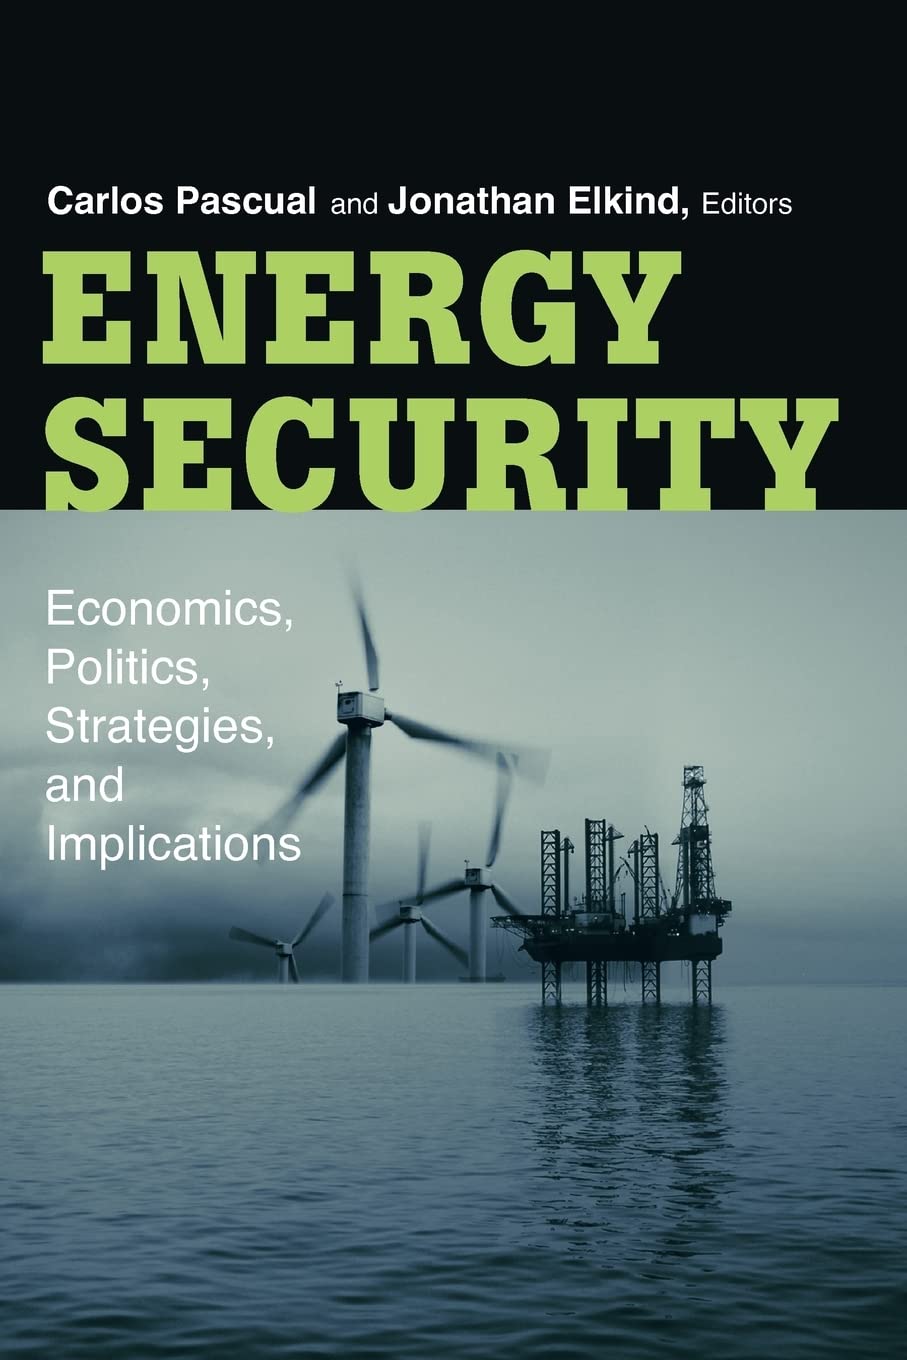 Energy security: Economics, Politics, Strategies, and Implications